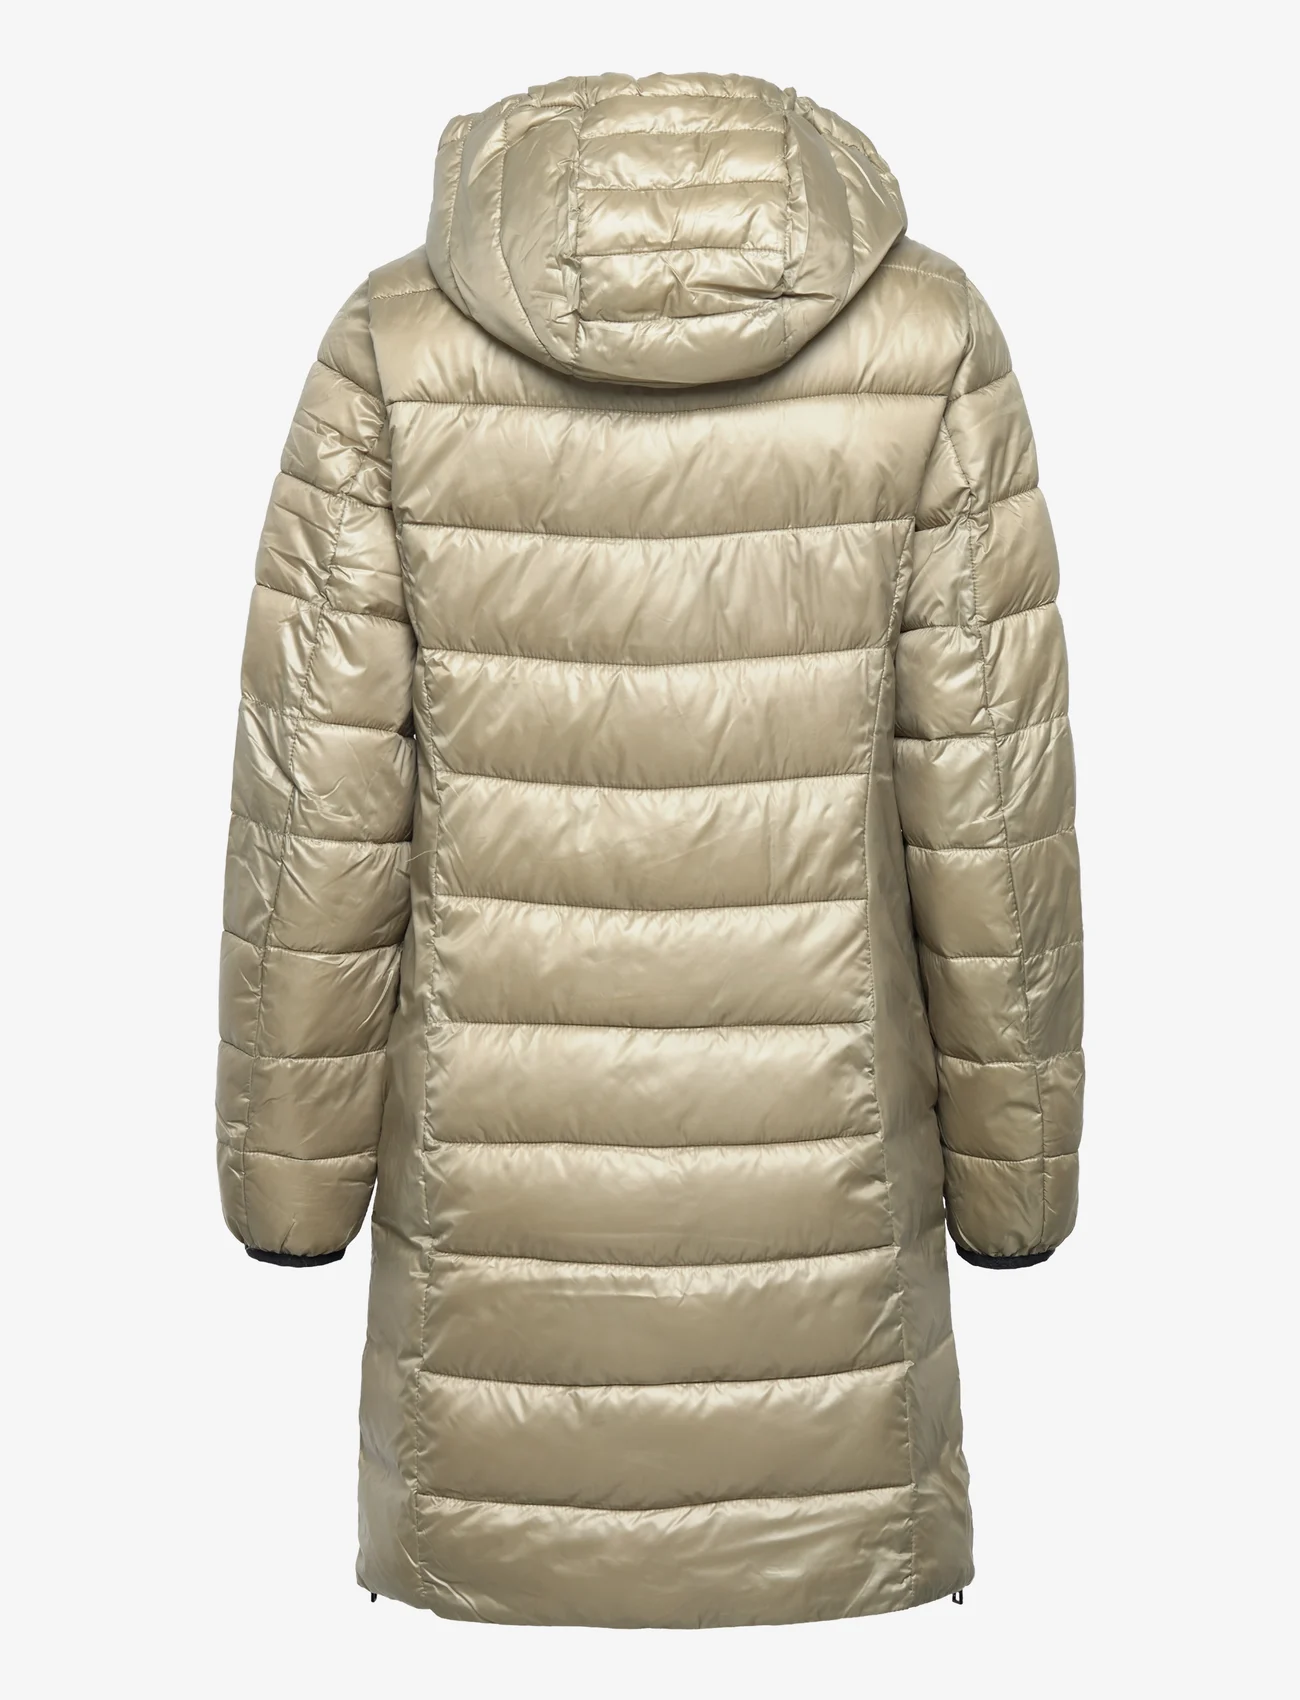 Esprit Casual - Quilted coat with detachable drawstring hood - vinterjakker - pale khaki - 1